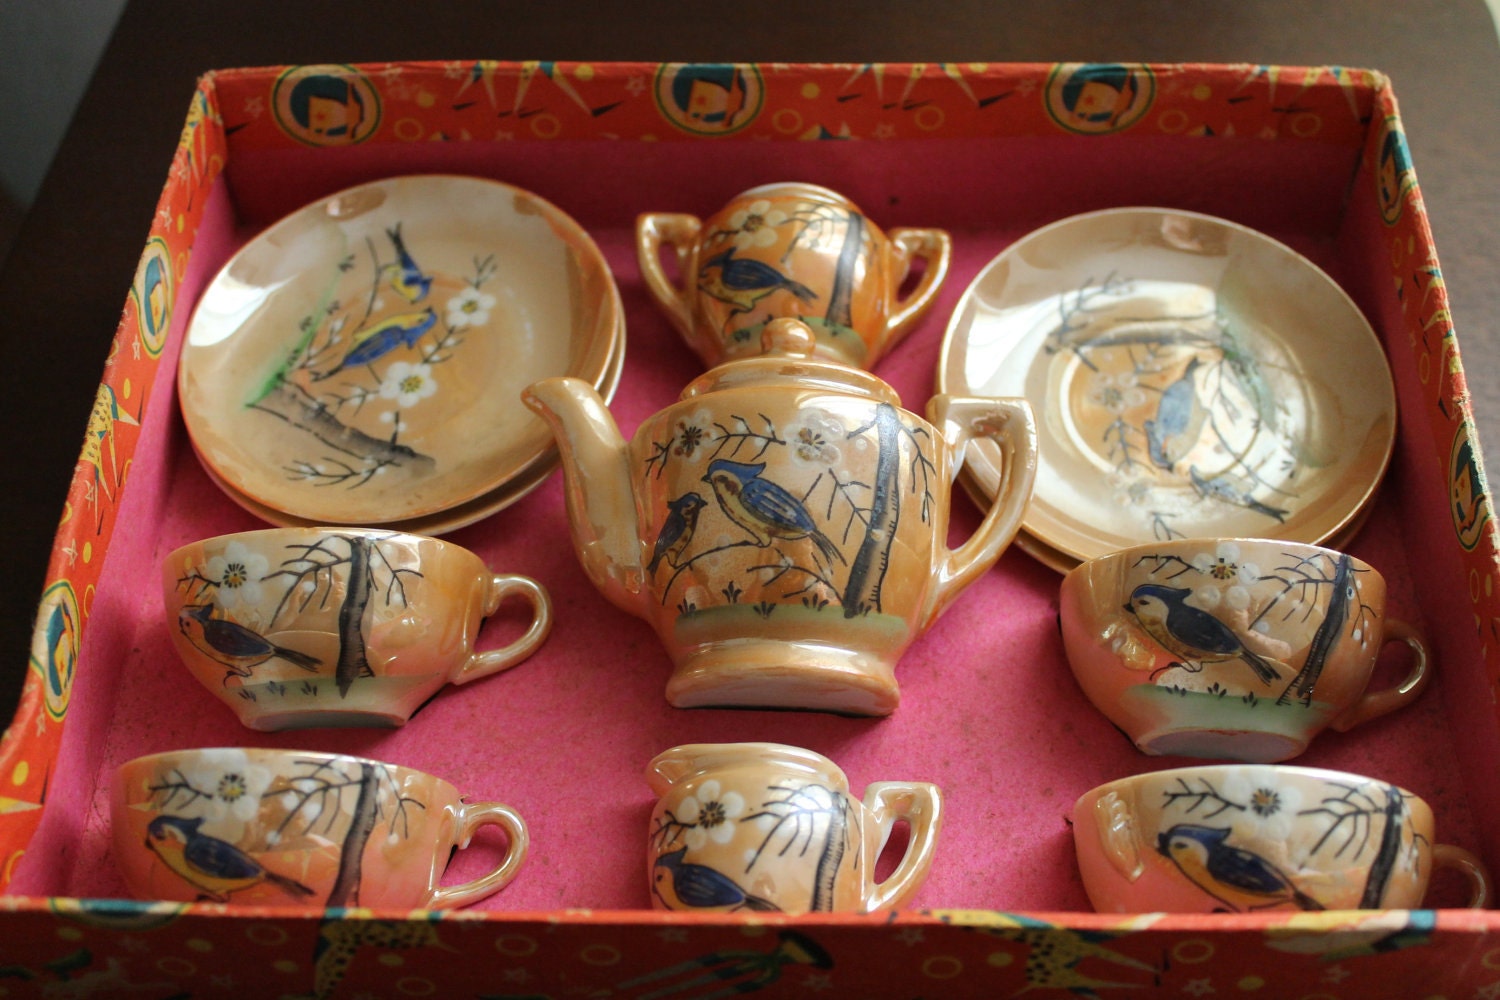 a vintage children's tea set with artistic detailing of birds